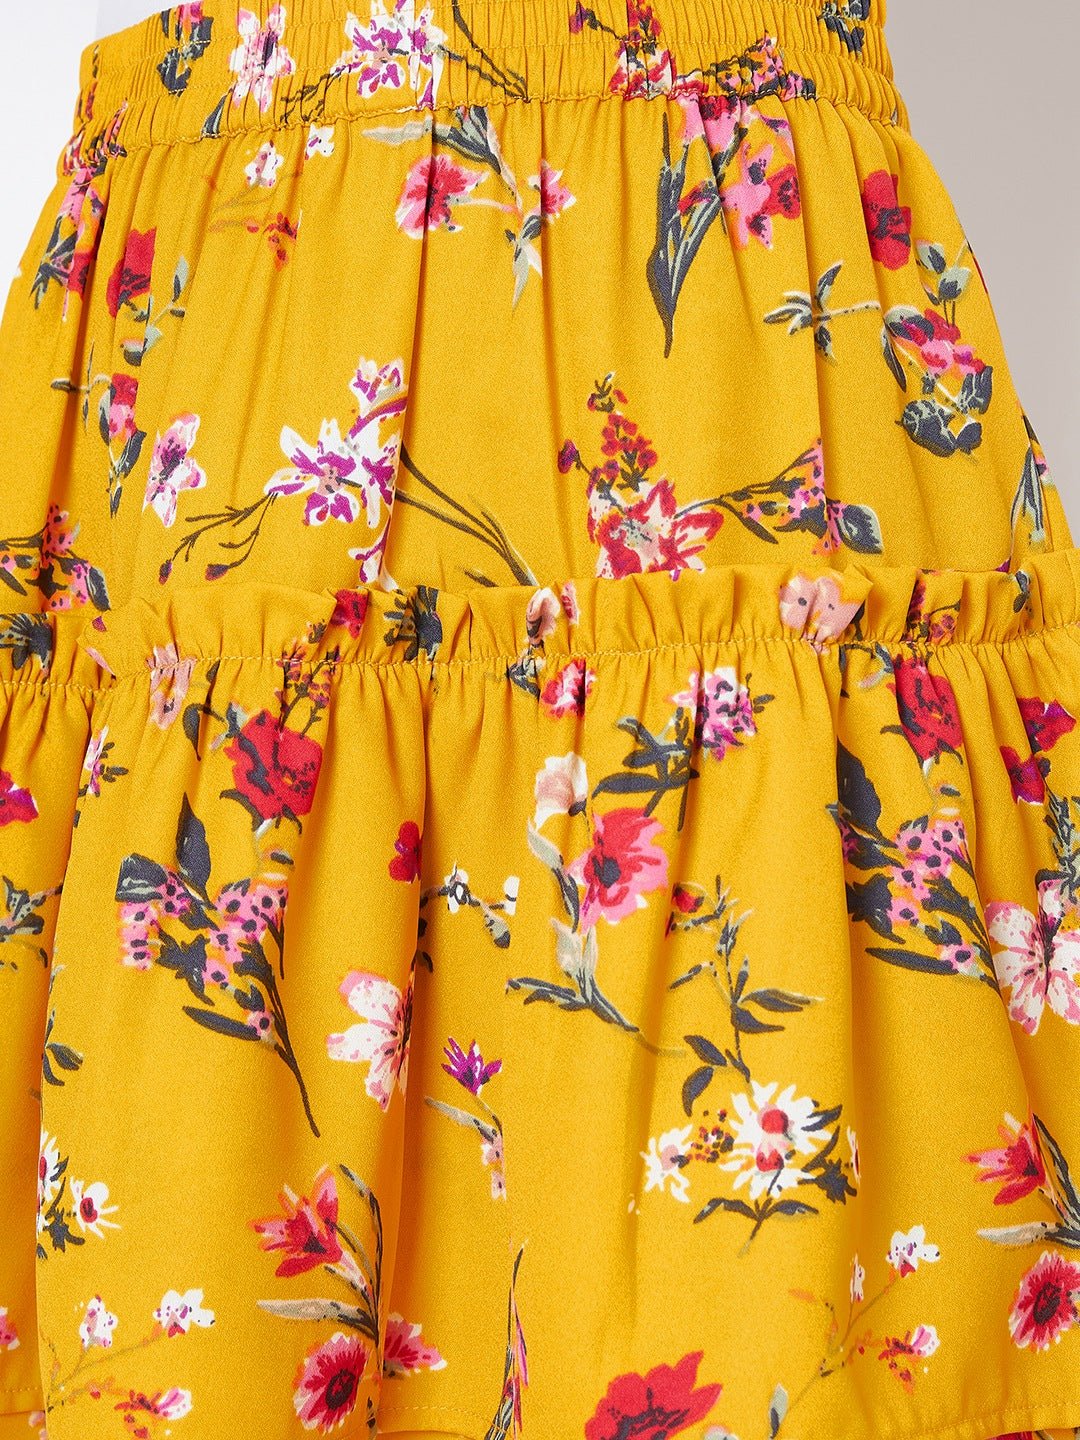 Folk Republic Women Yellow Floral Print Layered Slip-On Mini Skirt - #folk republic#